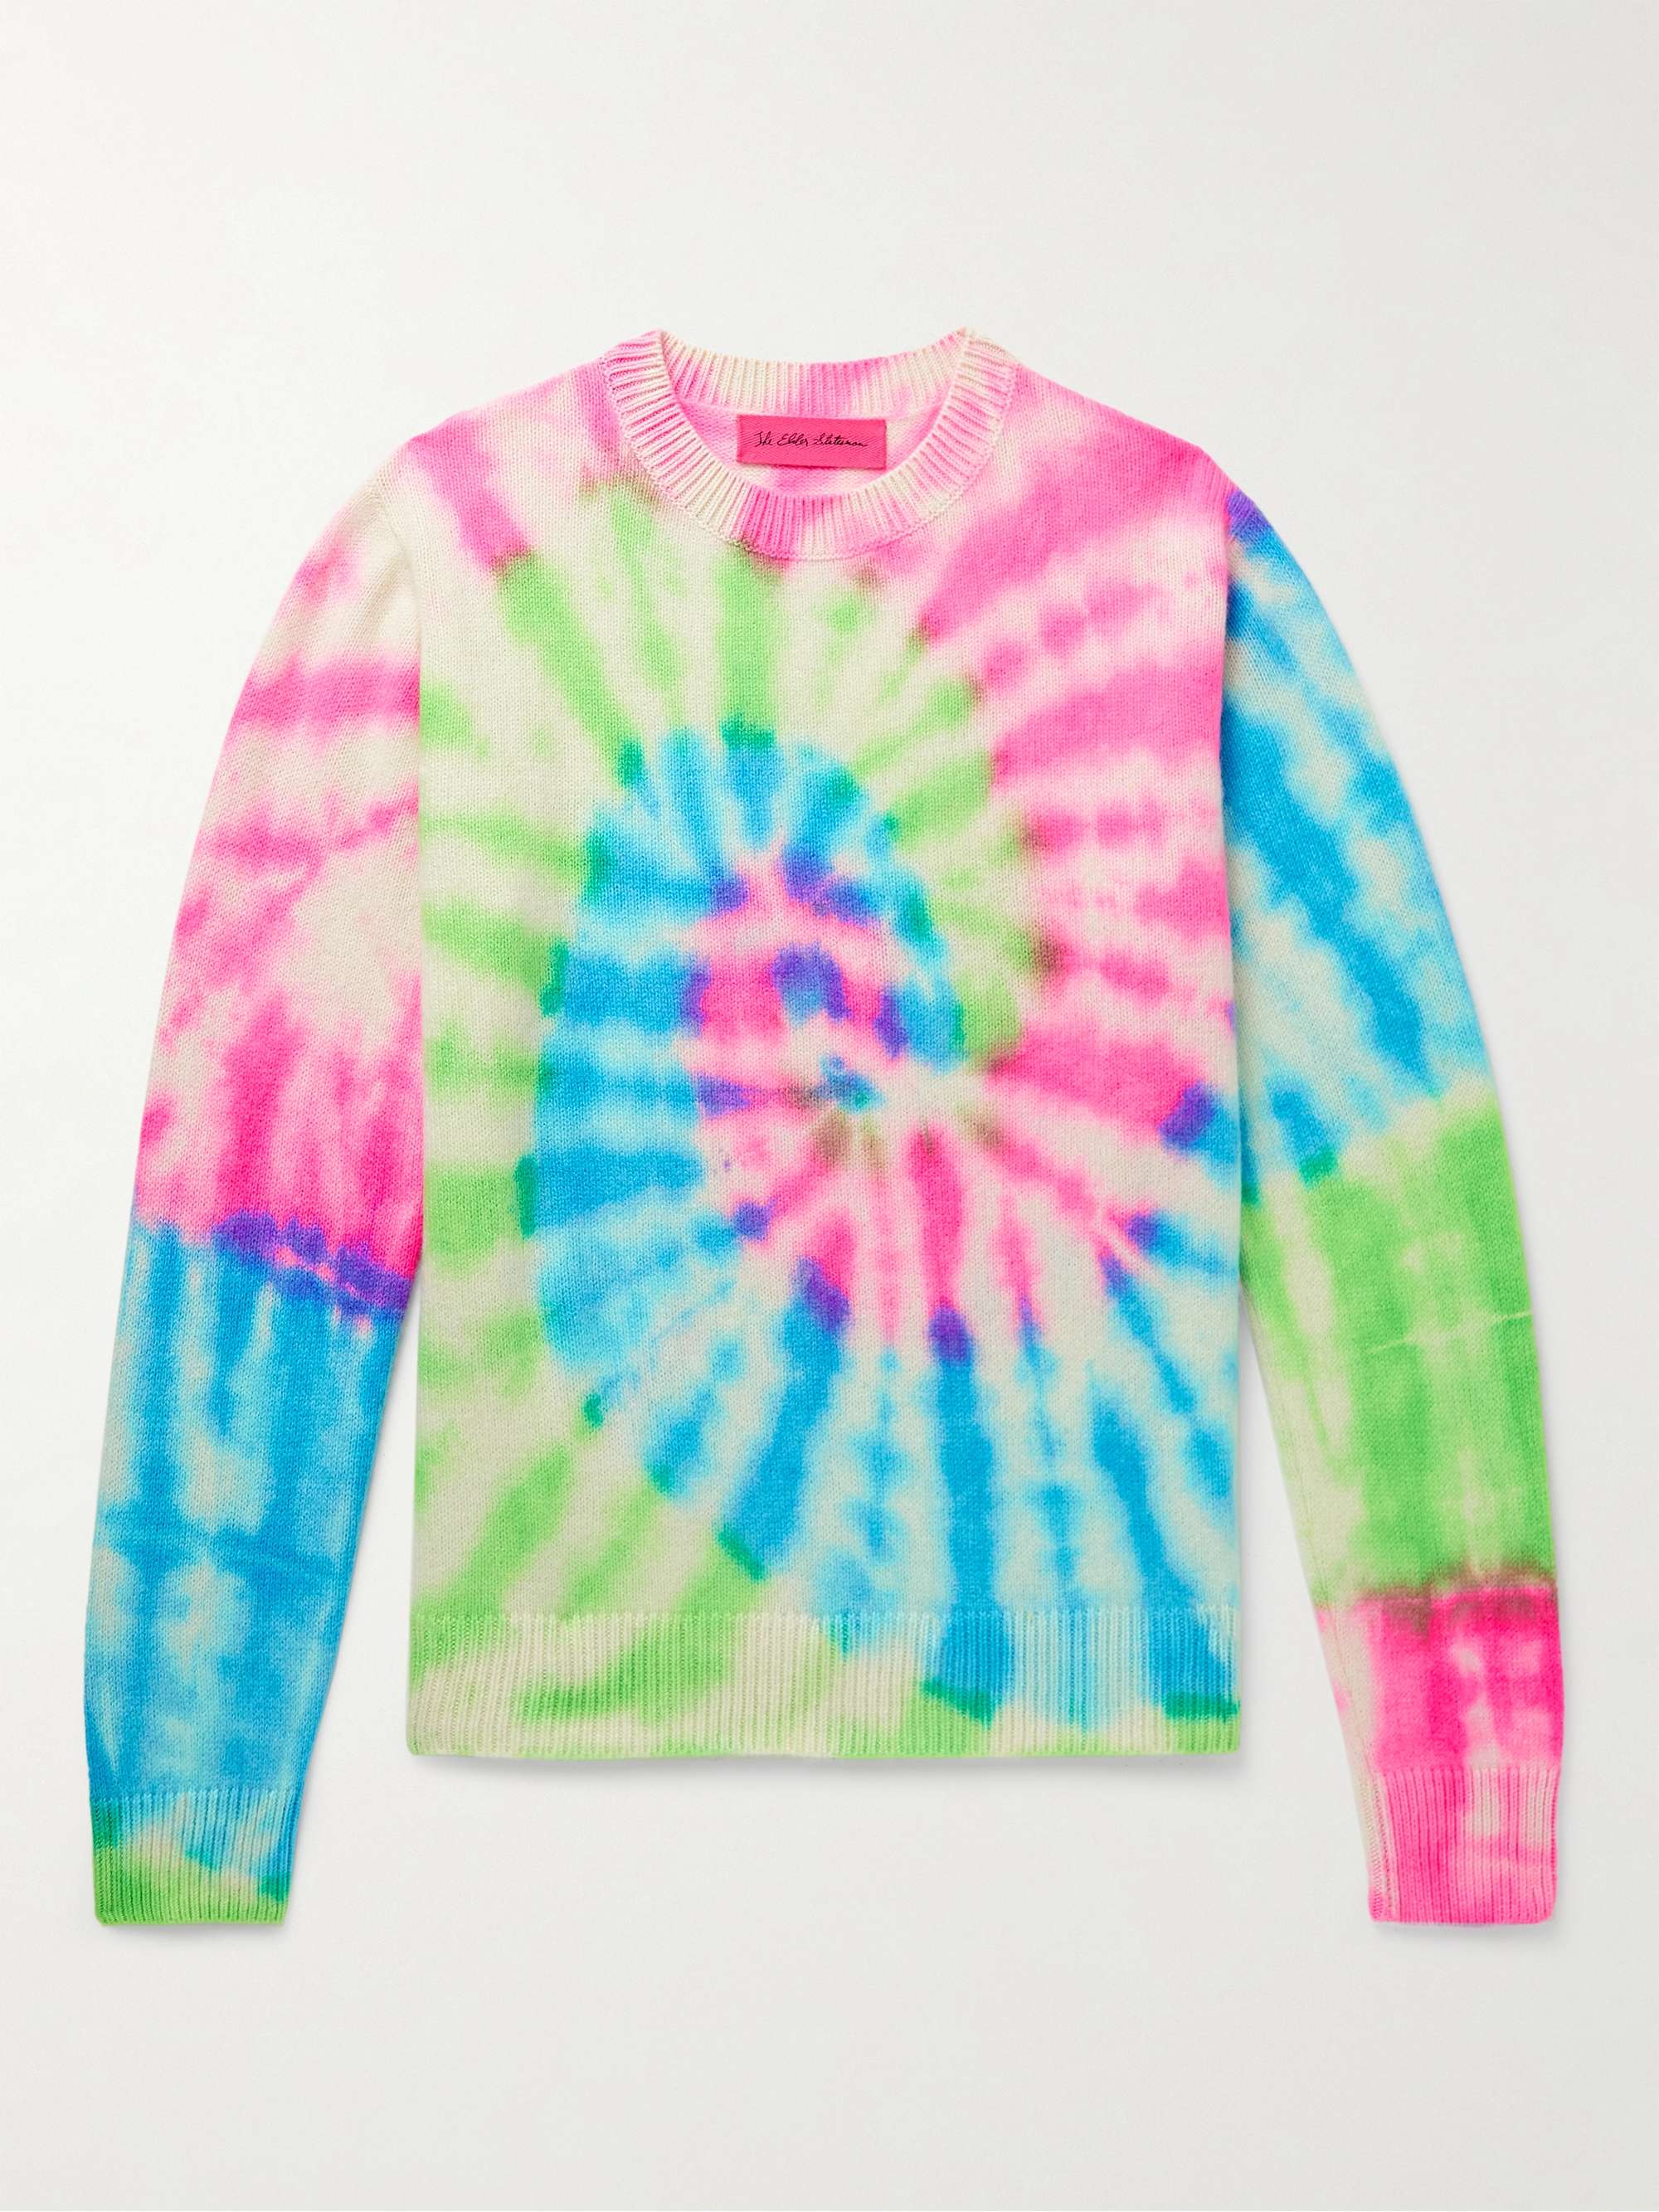 THE ELDER STATESMAN Spiral Tranquil Tye-Dyed Cashmere Sweater